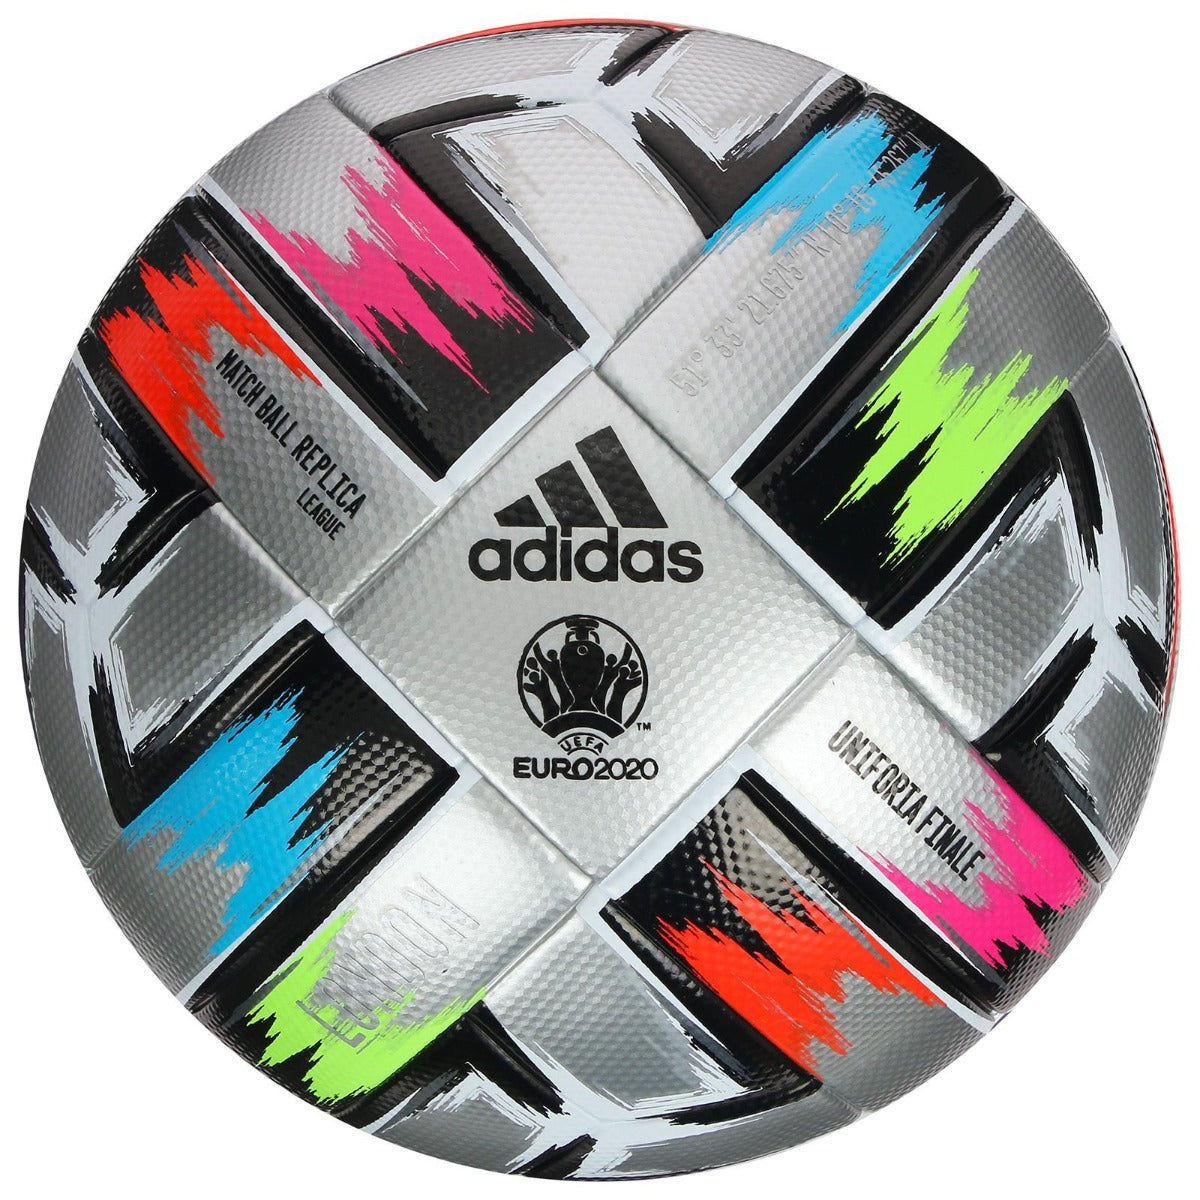 Adidas Finale 21 League Ball - Silver-Black-Multi (Front)